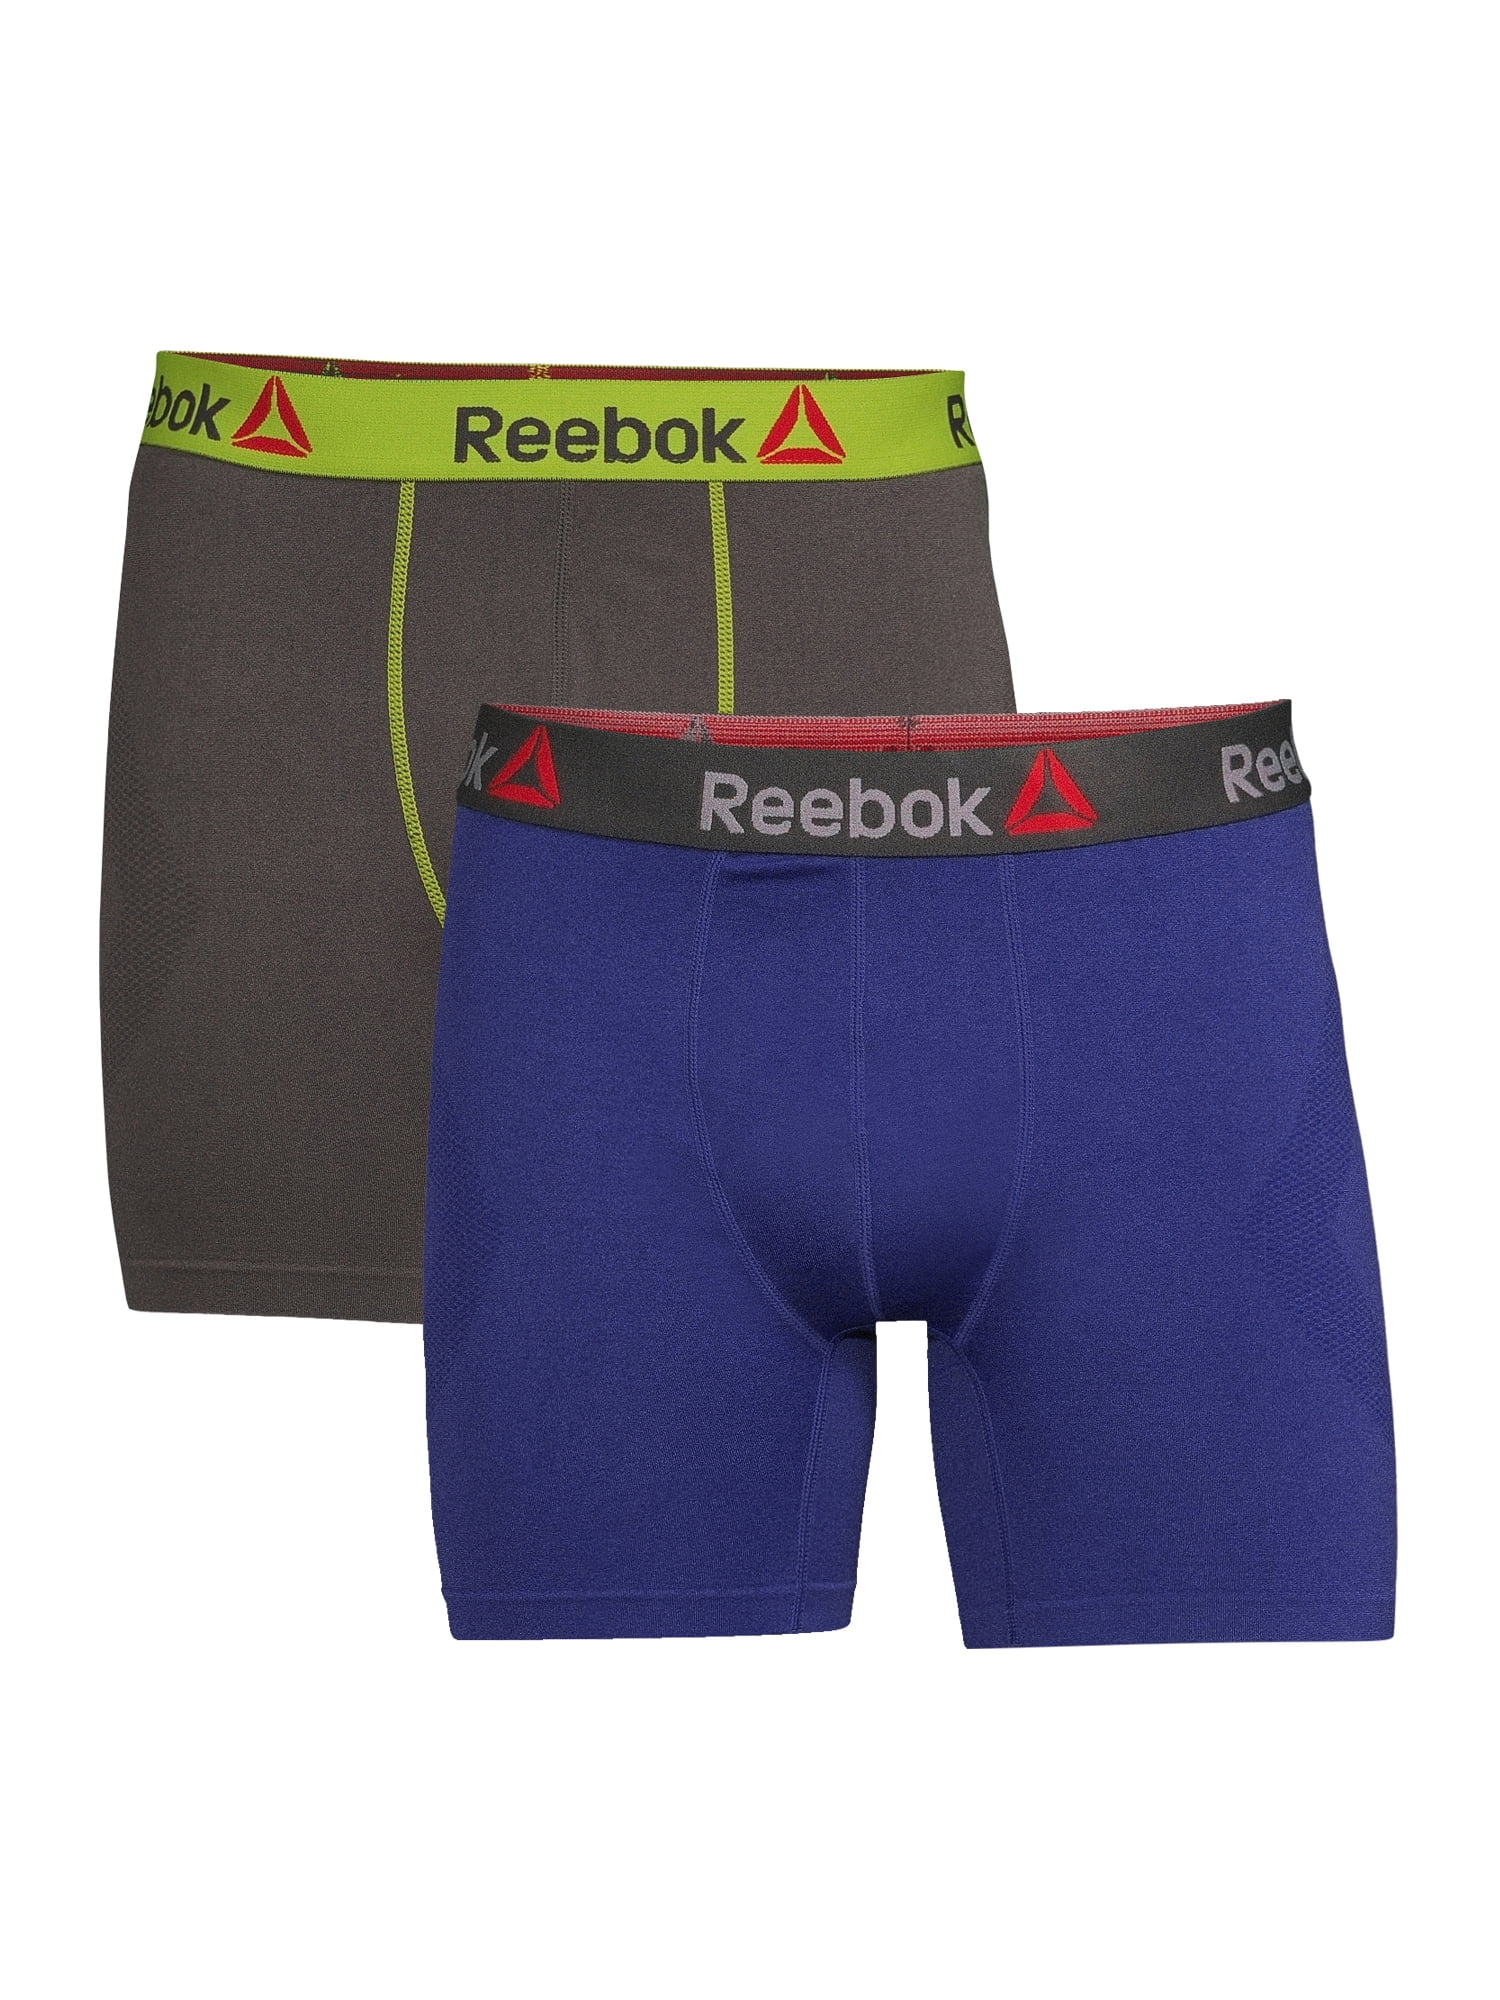 Reebok Men's Performance Boxer Briefs, 2-Pack, Sizes S-XL - Walmart.com